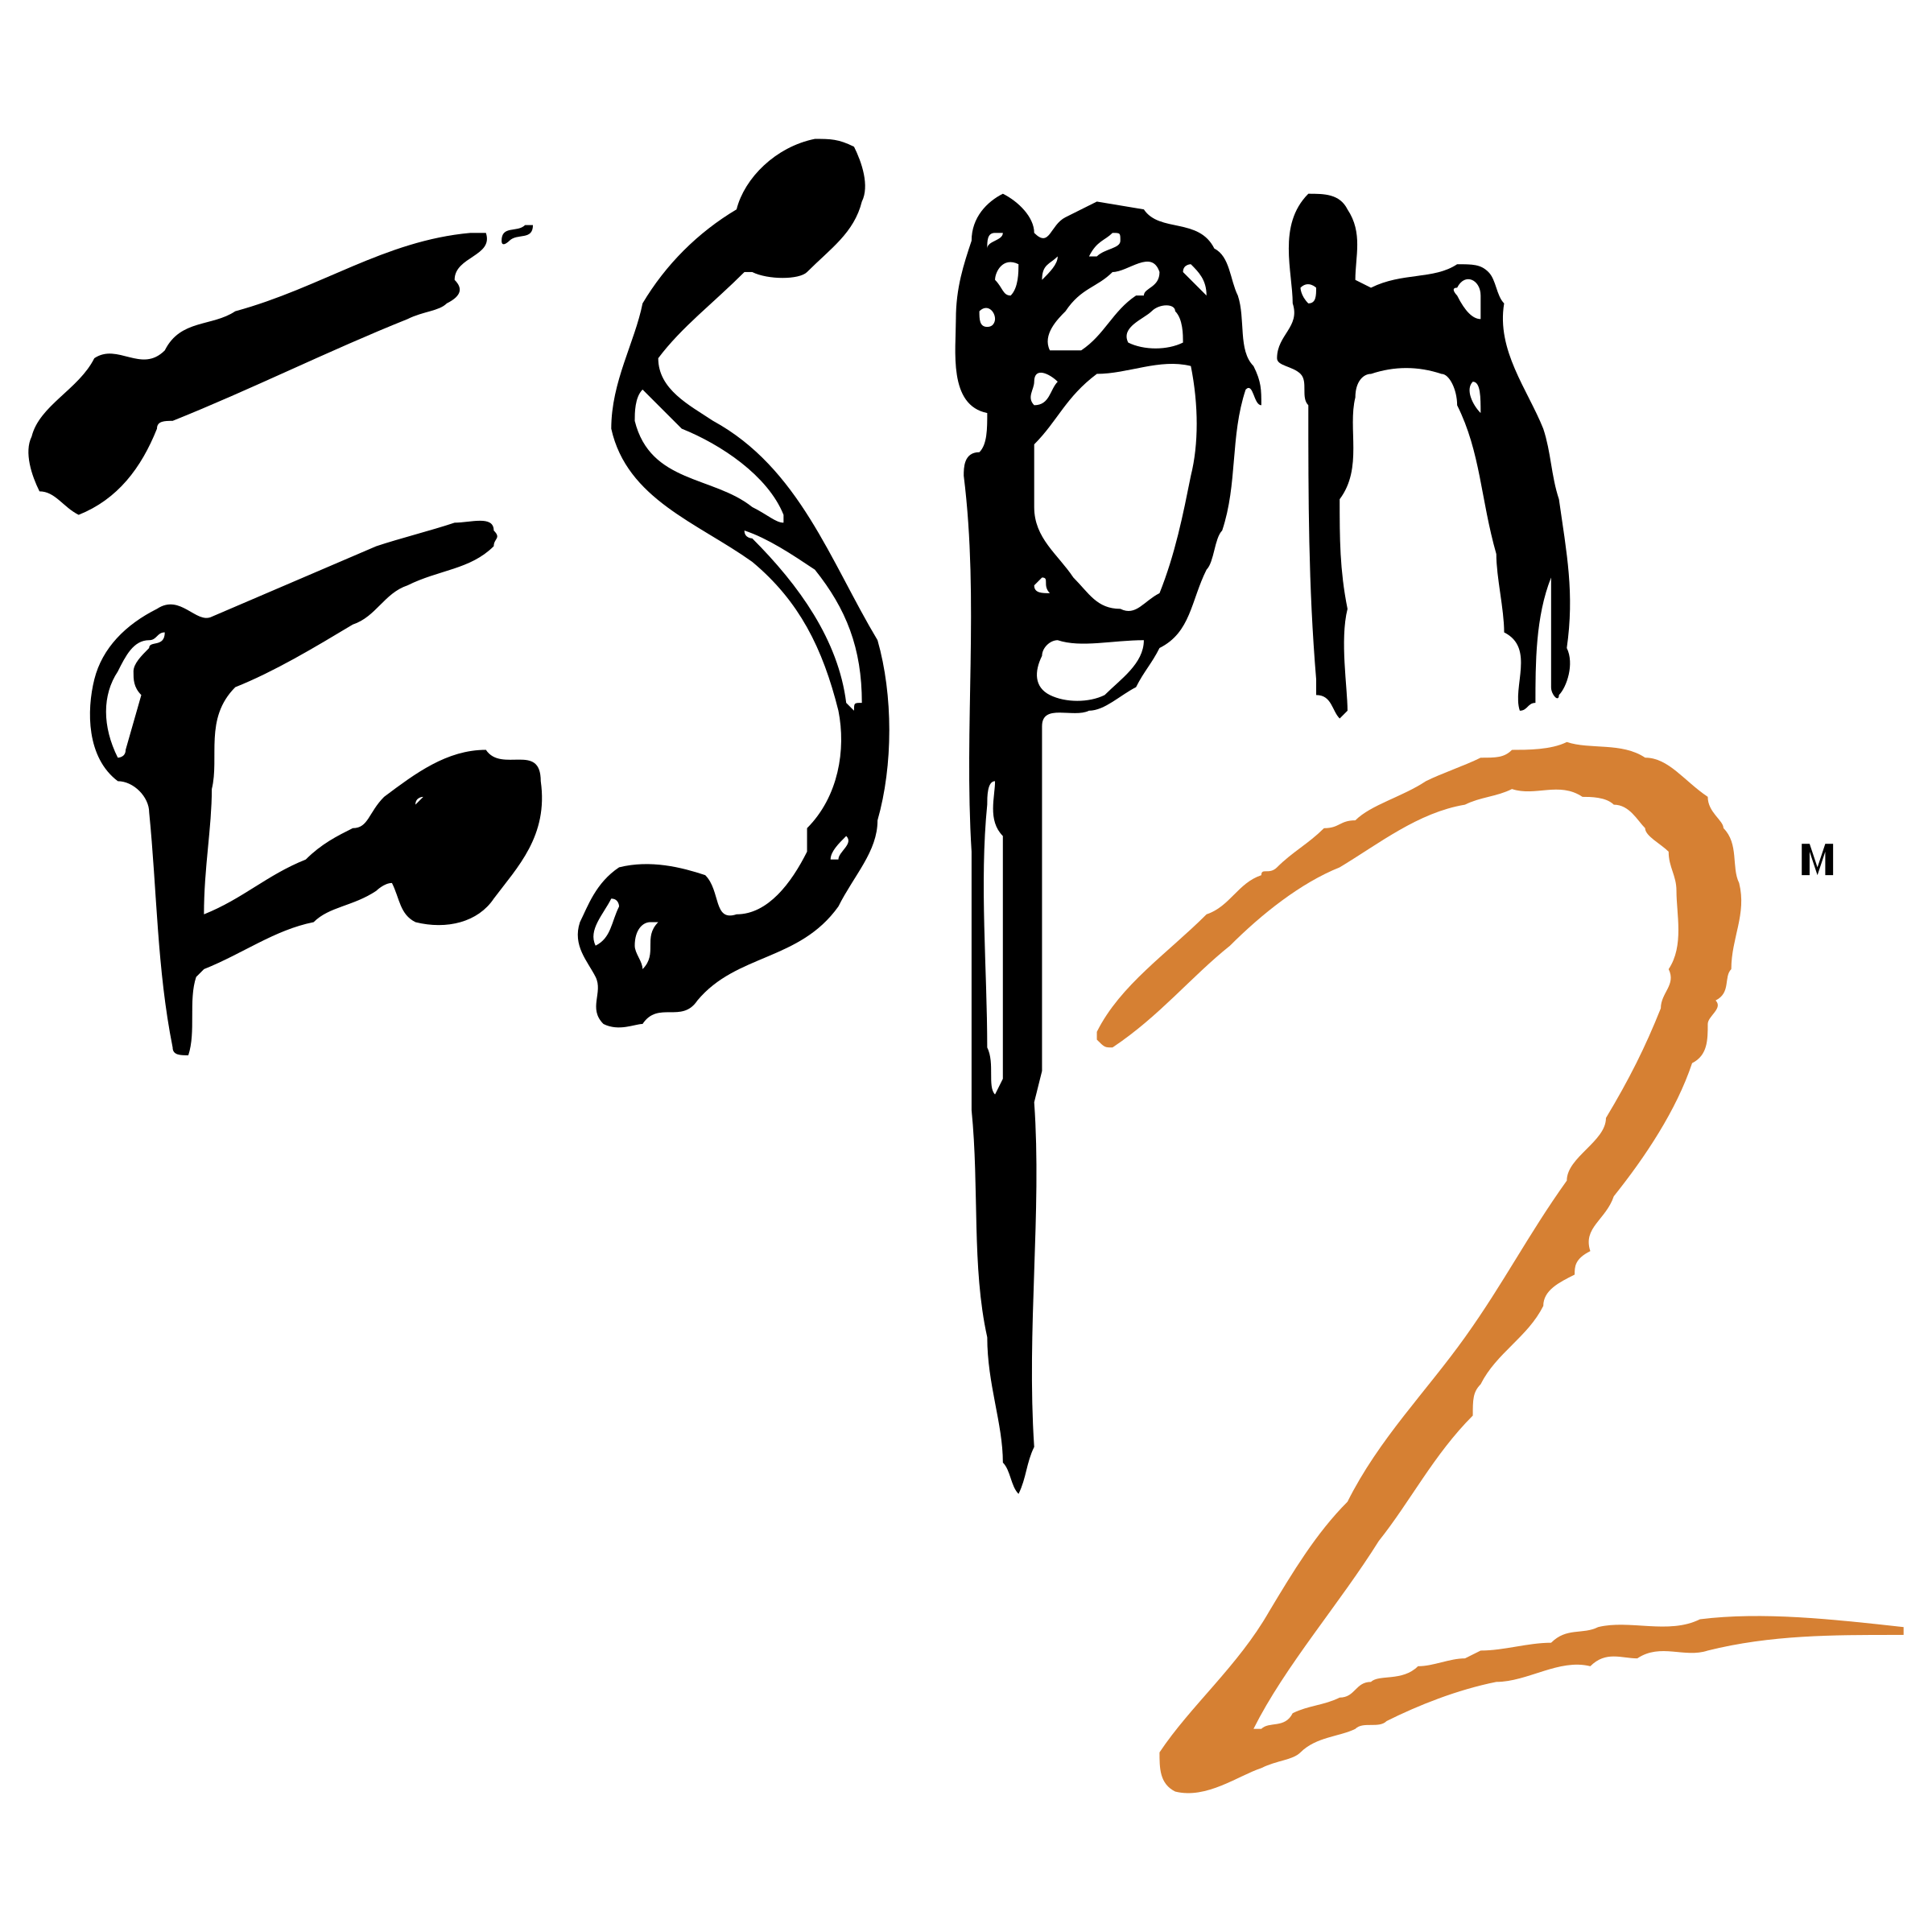 ESPN 2 Logo - ESPN 2 Logo PNG Transparent & SVG Vector - Freebie Supply